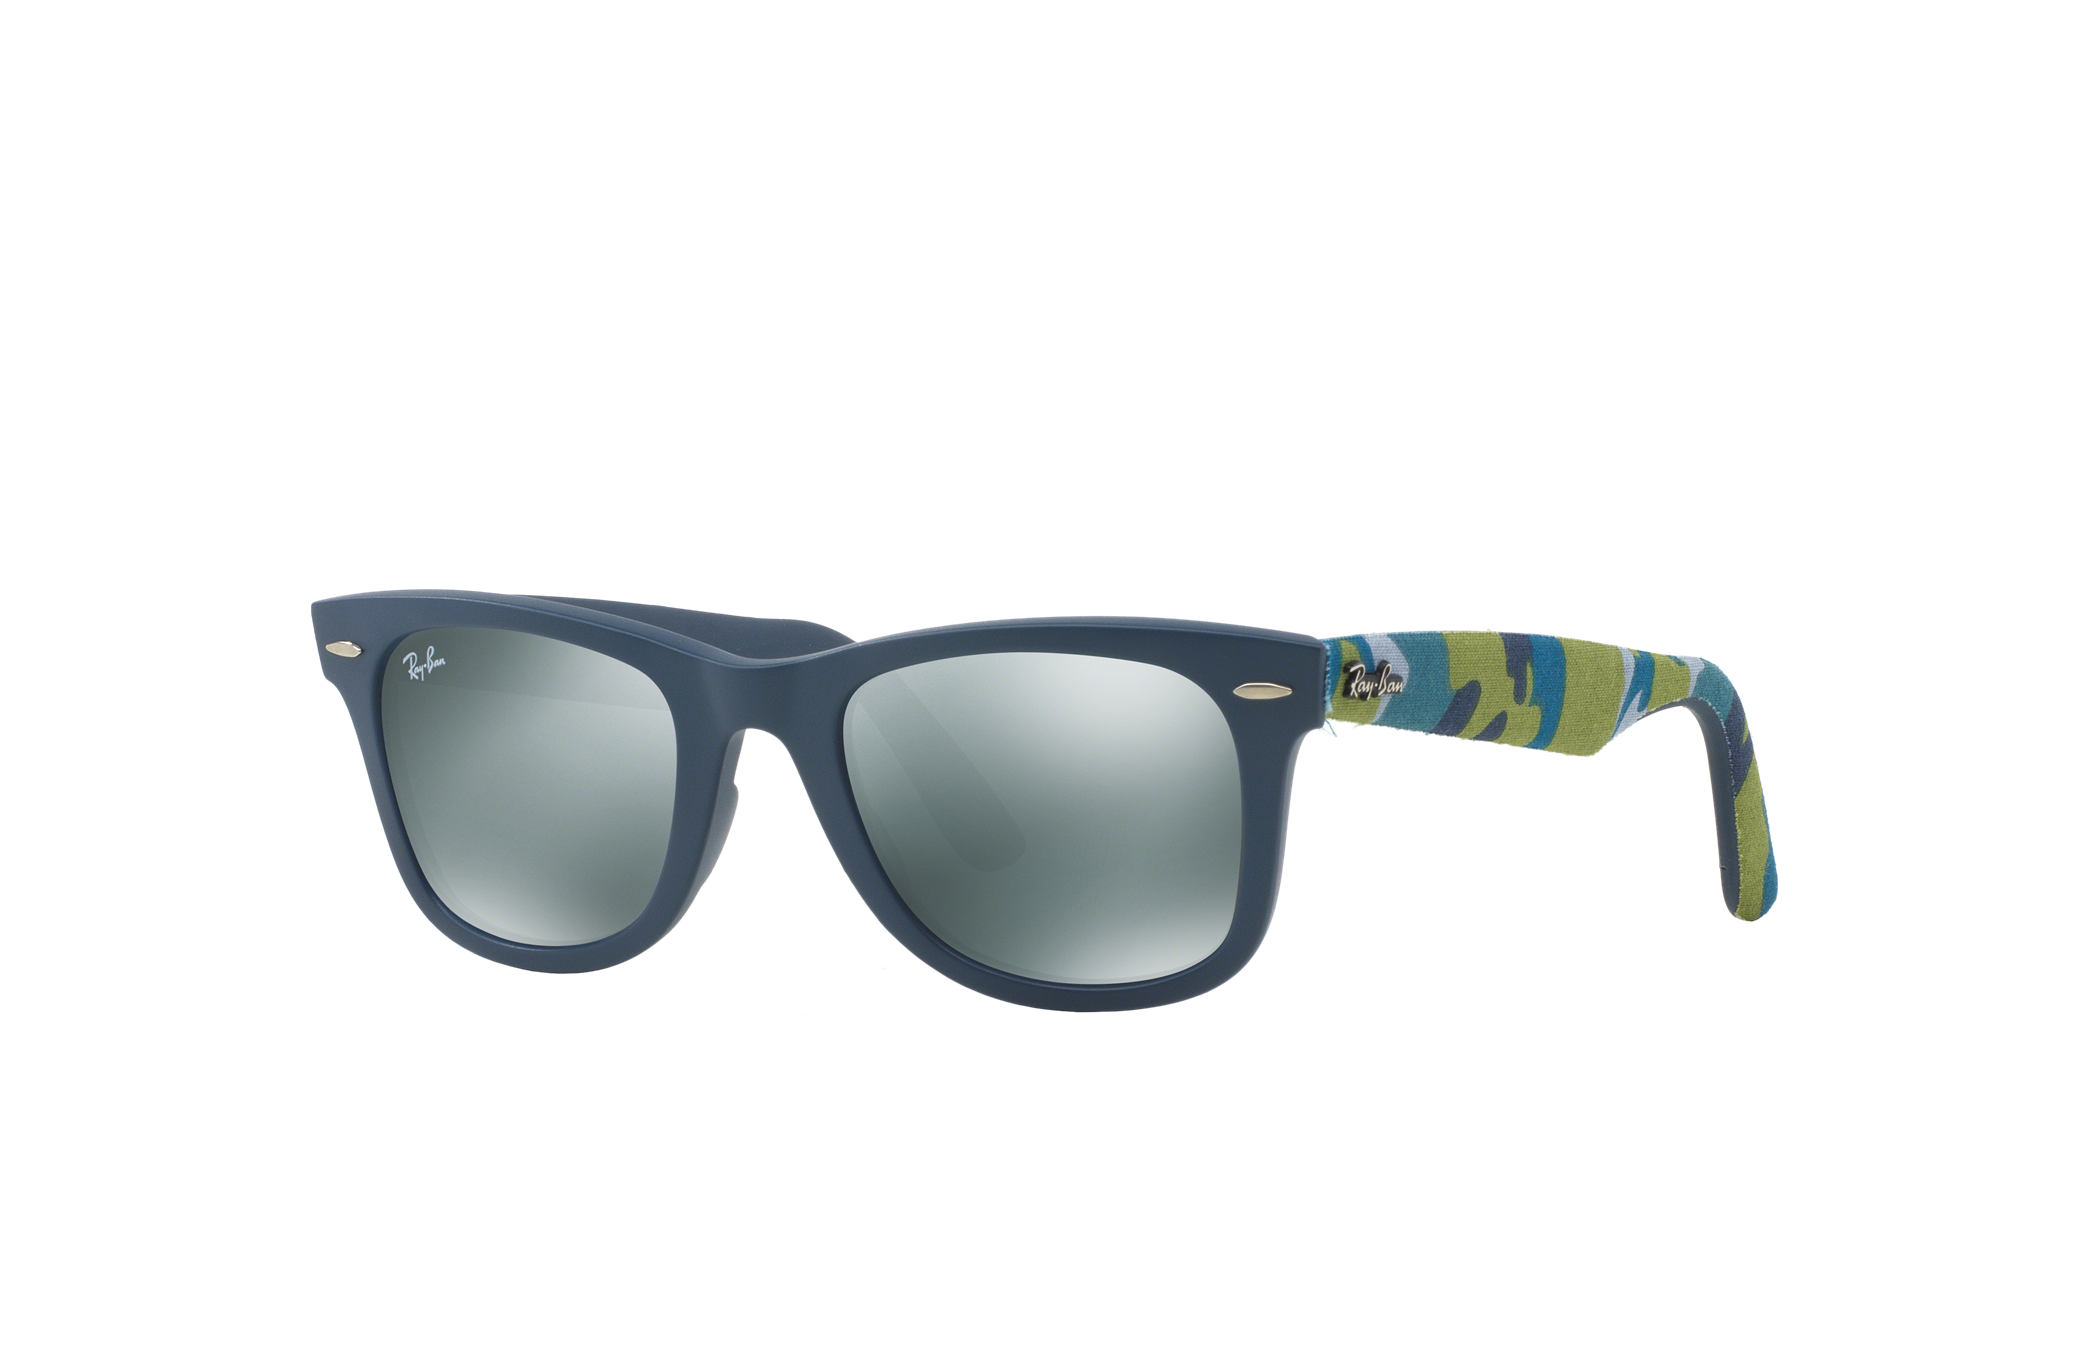 Original Wayfarer Urban Camouflage Sunglasses in Blue and Silver | Ray-Ban®